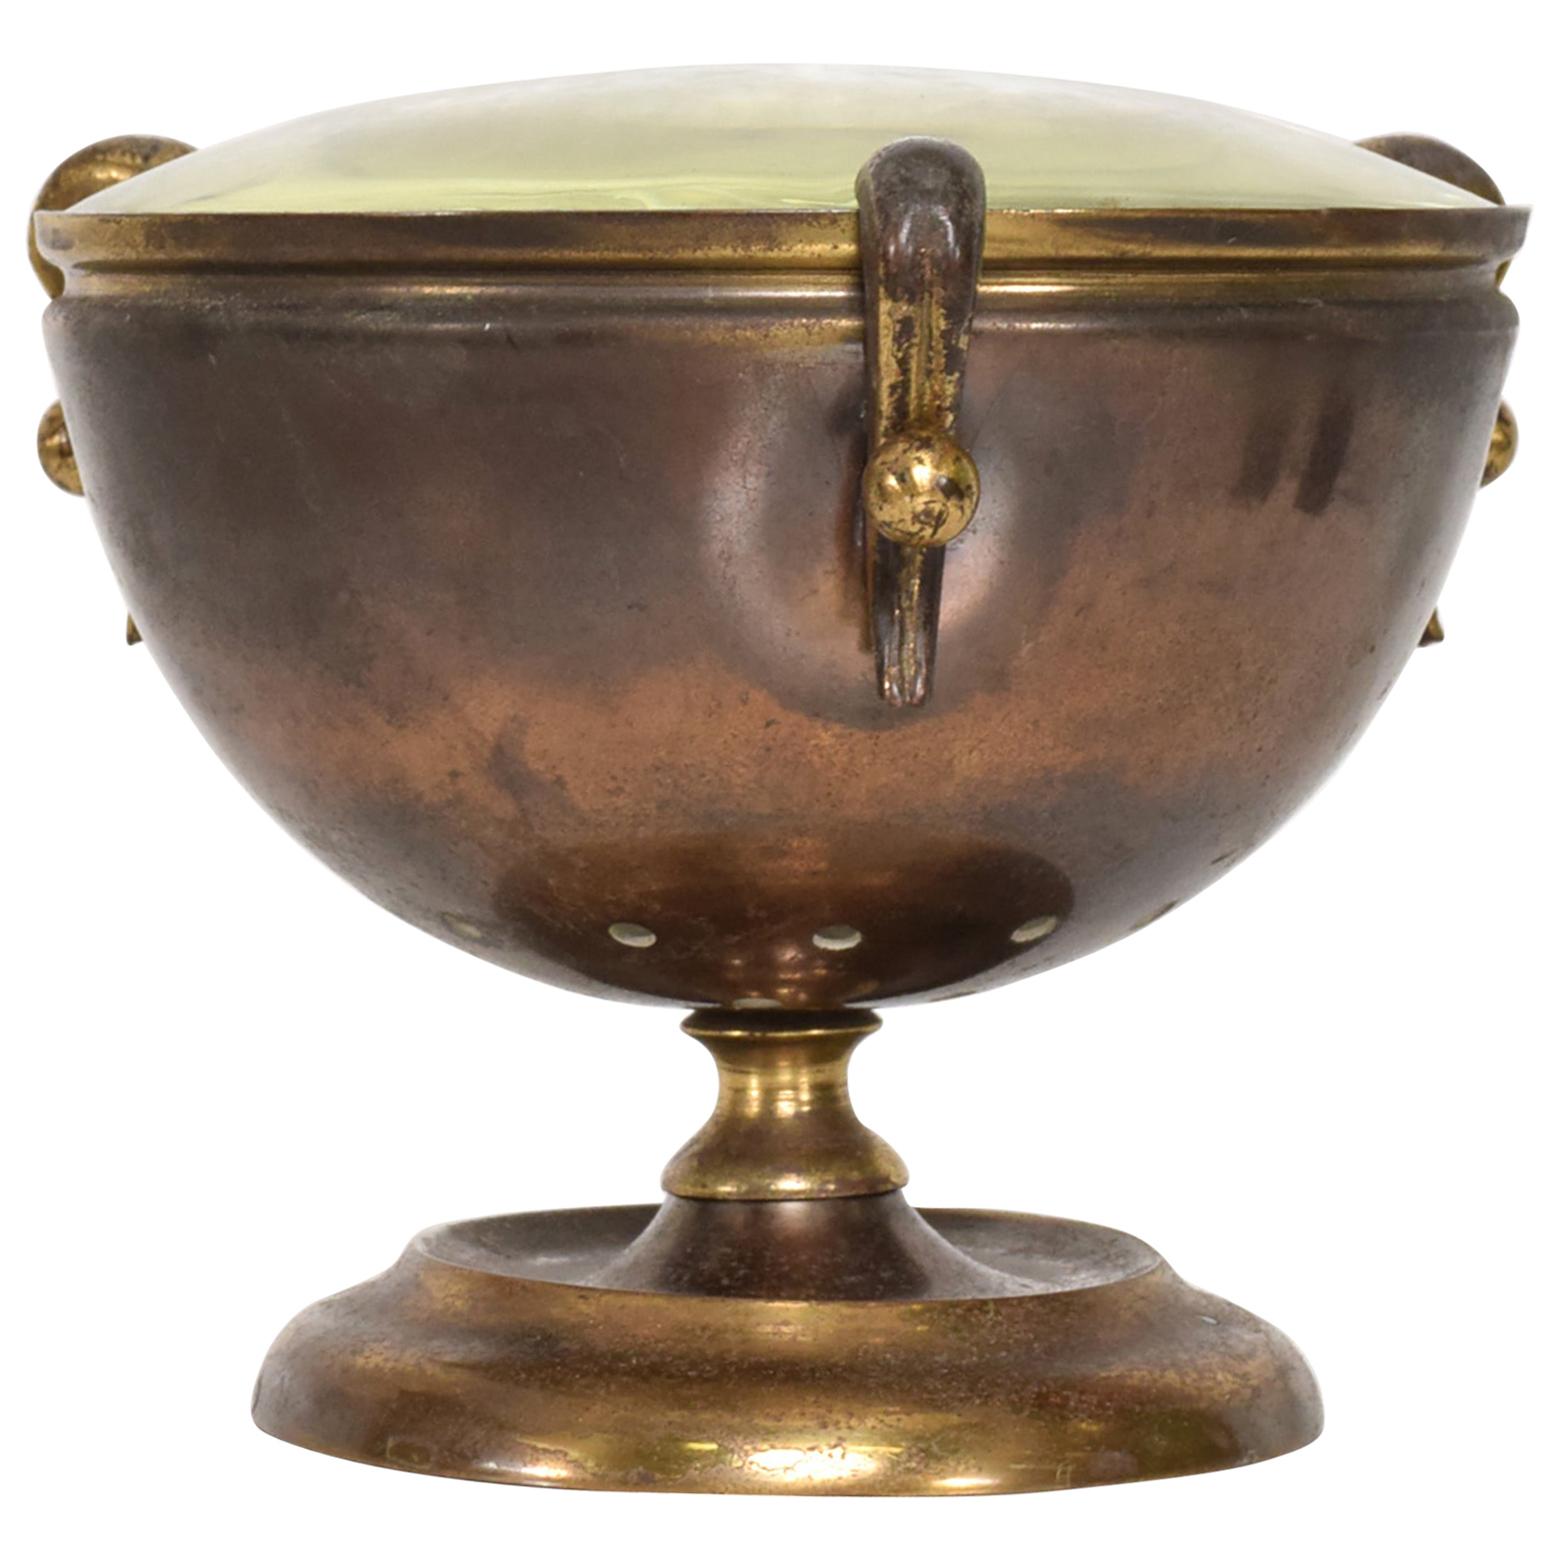 Italian Table Lamp Urn Shape Ponti Style Mid-Century Modern